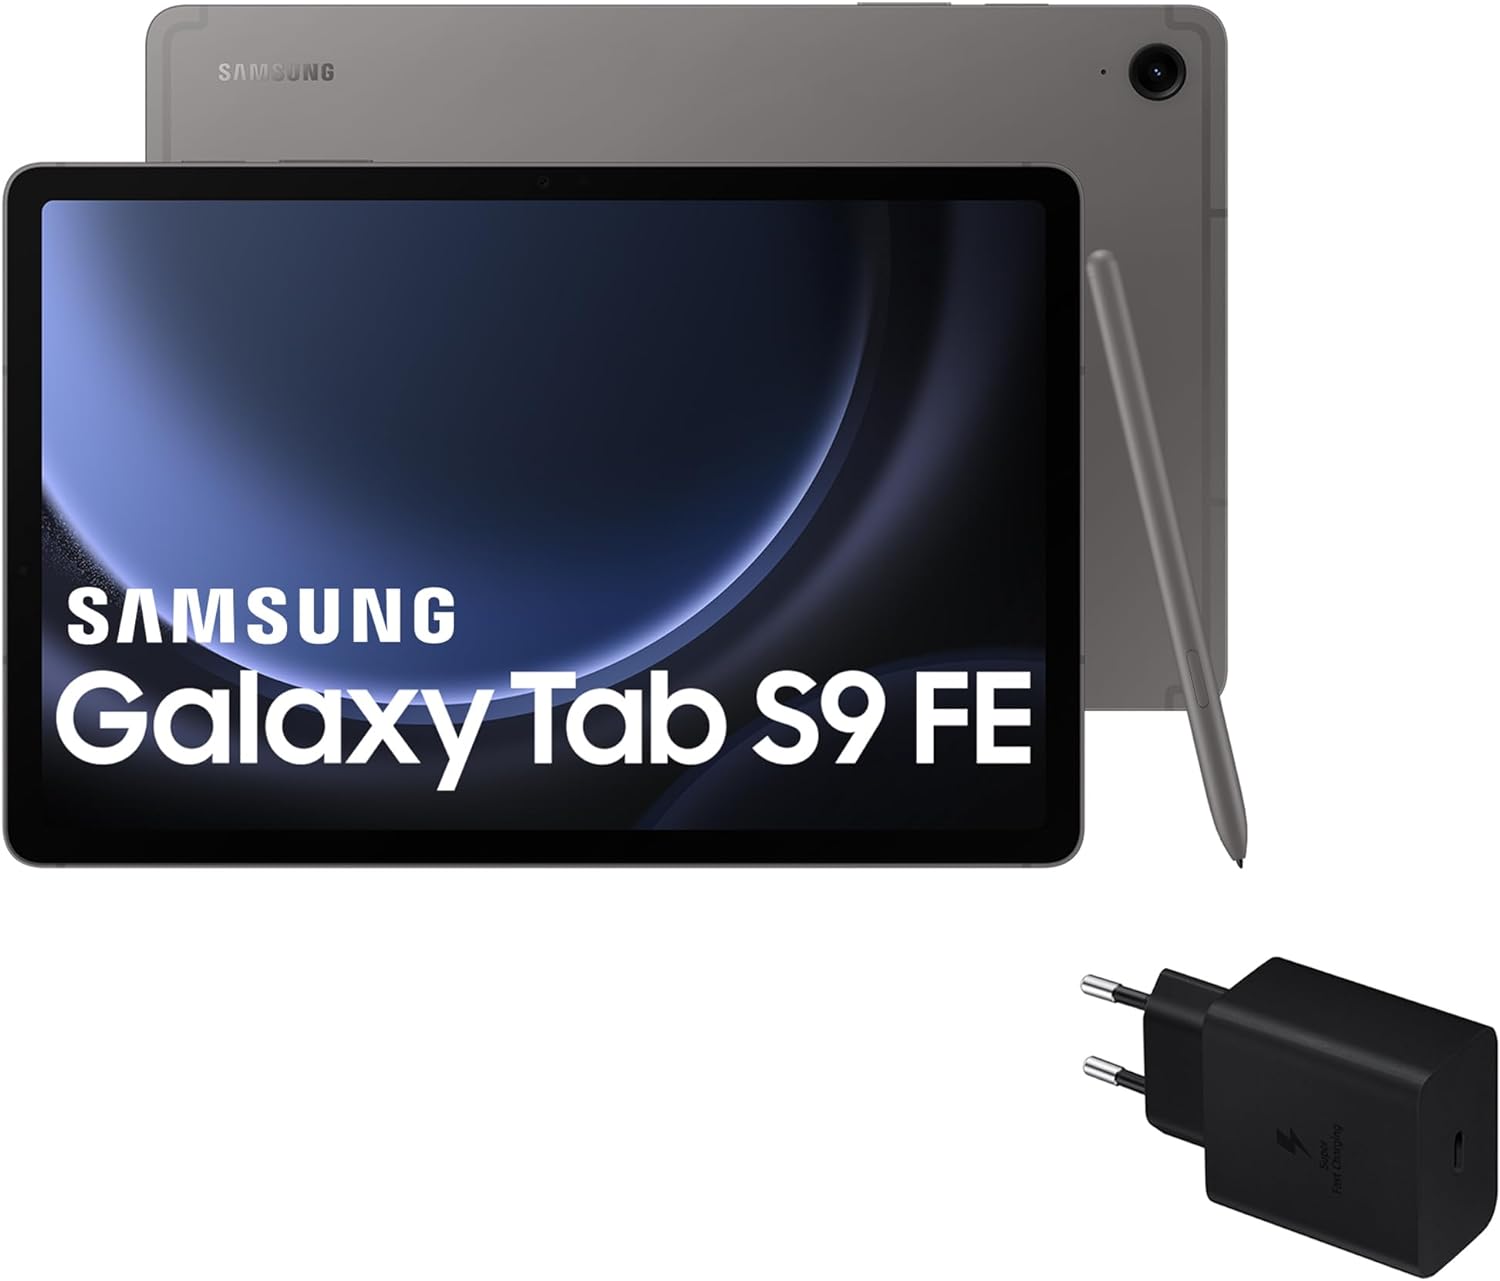 Samsung Galaxy Tab S9 FE vs. Samsung Galaxy Tab S9 FE+ vs. Samsung Galaxy Tab S9